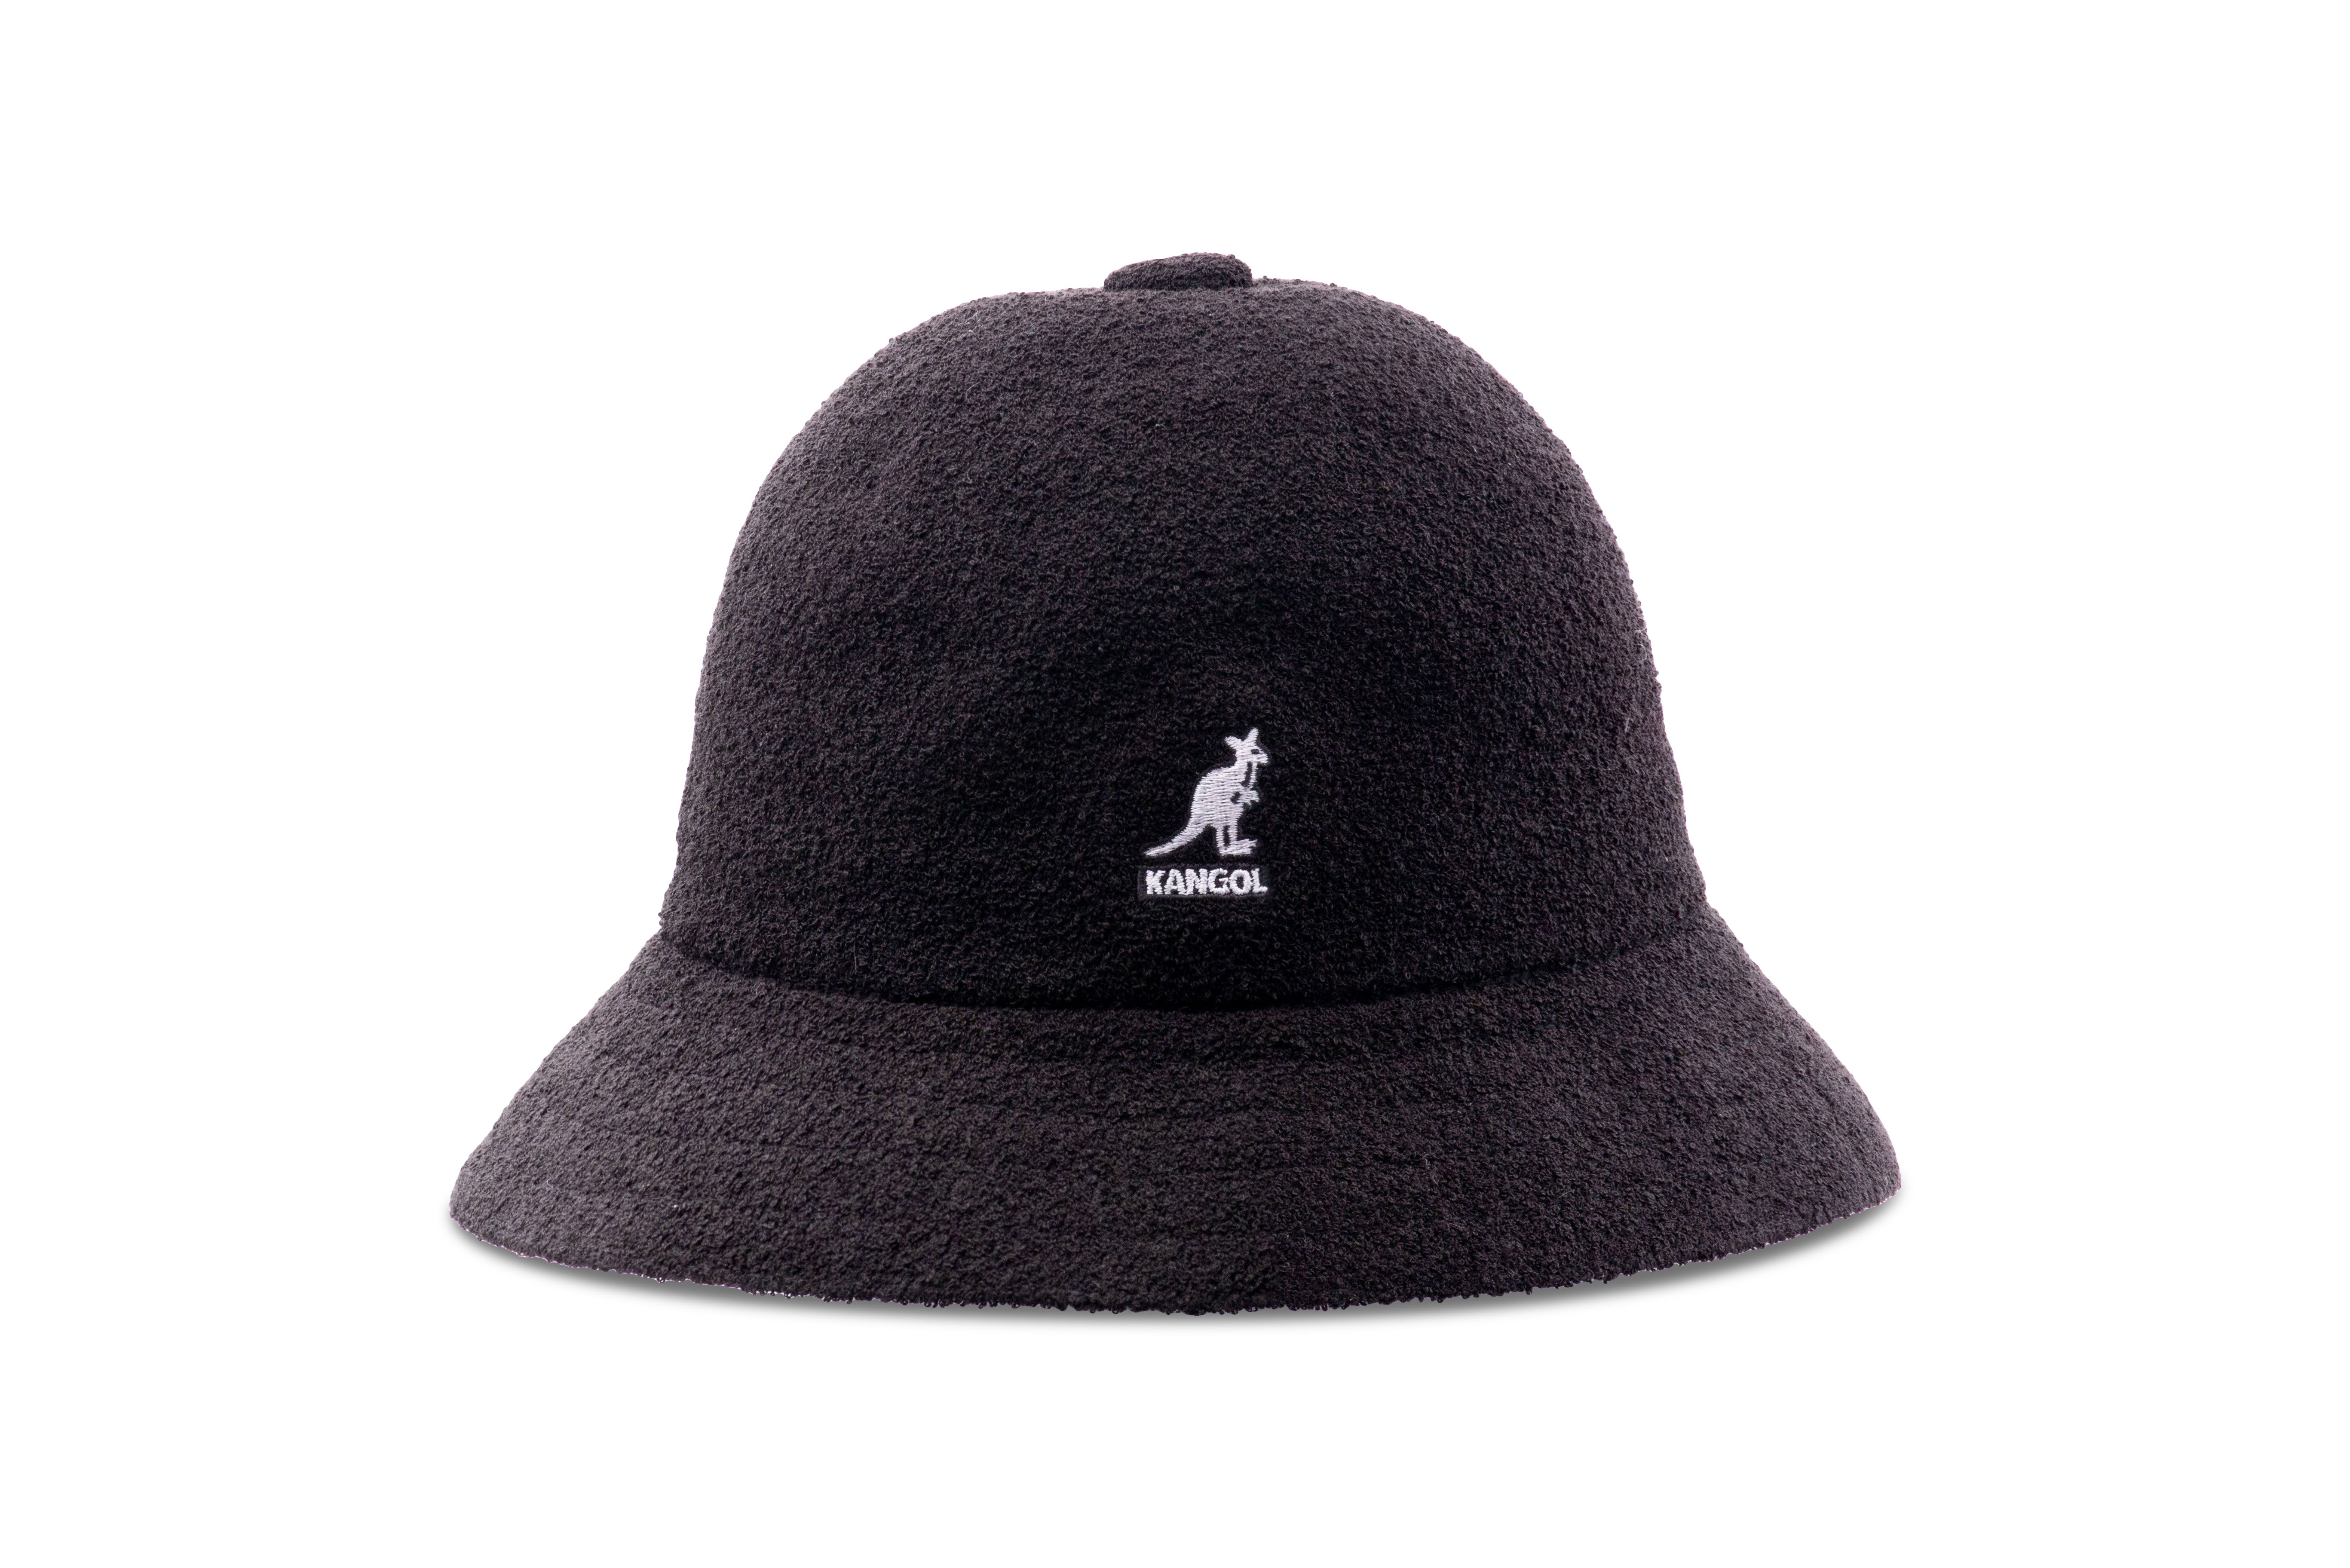 Kangol Bucket Bermuda Unisex Hat - Black - S